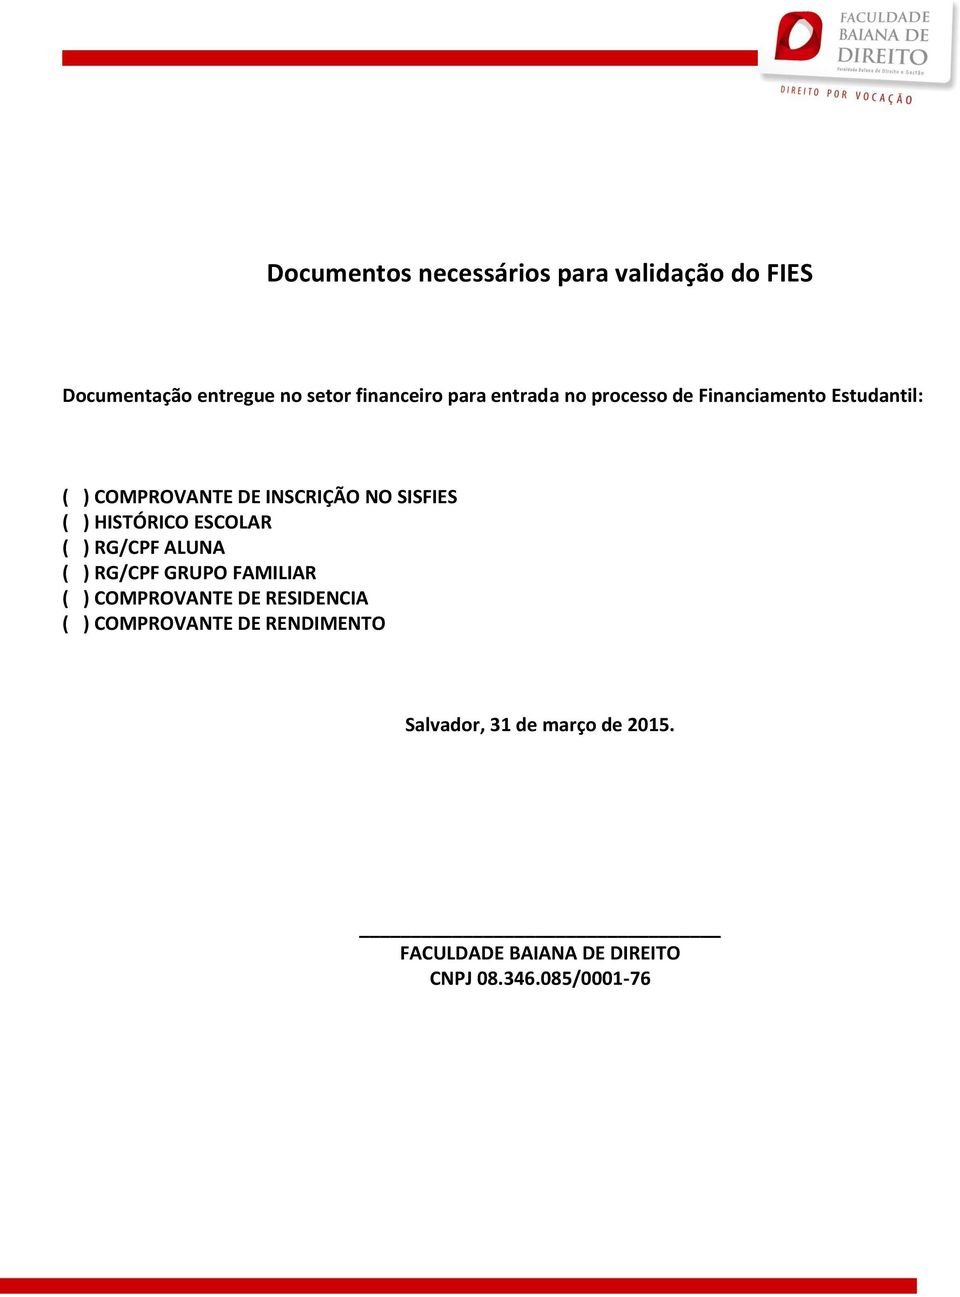 HISTÓRICO ESCOLAR ( ) RG/CPF ALUNA ( ) RG/CPF GRUPO FAMILIAR ( ) COMPROVANTE DE RESIDENCIA ( )